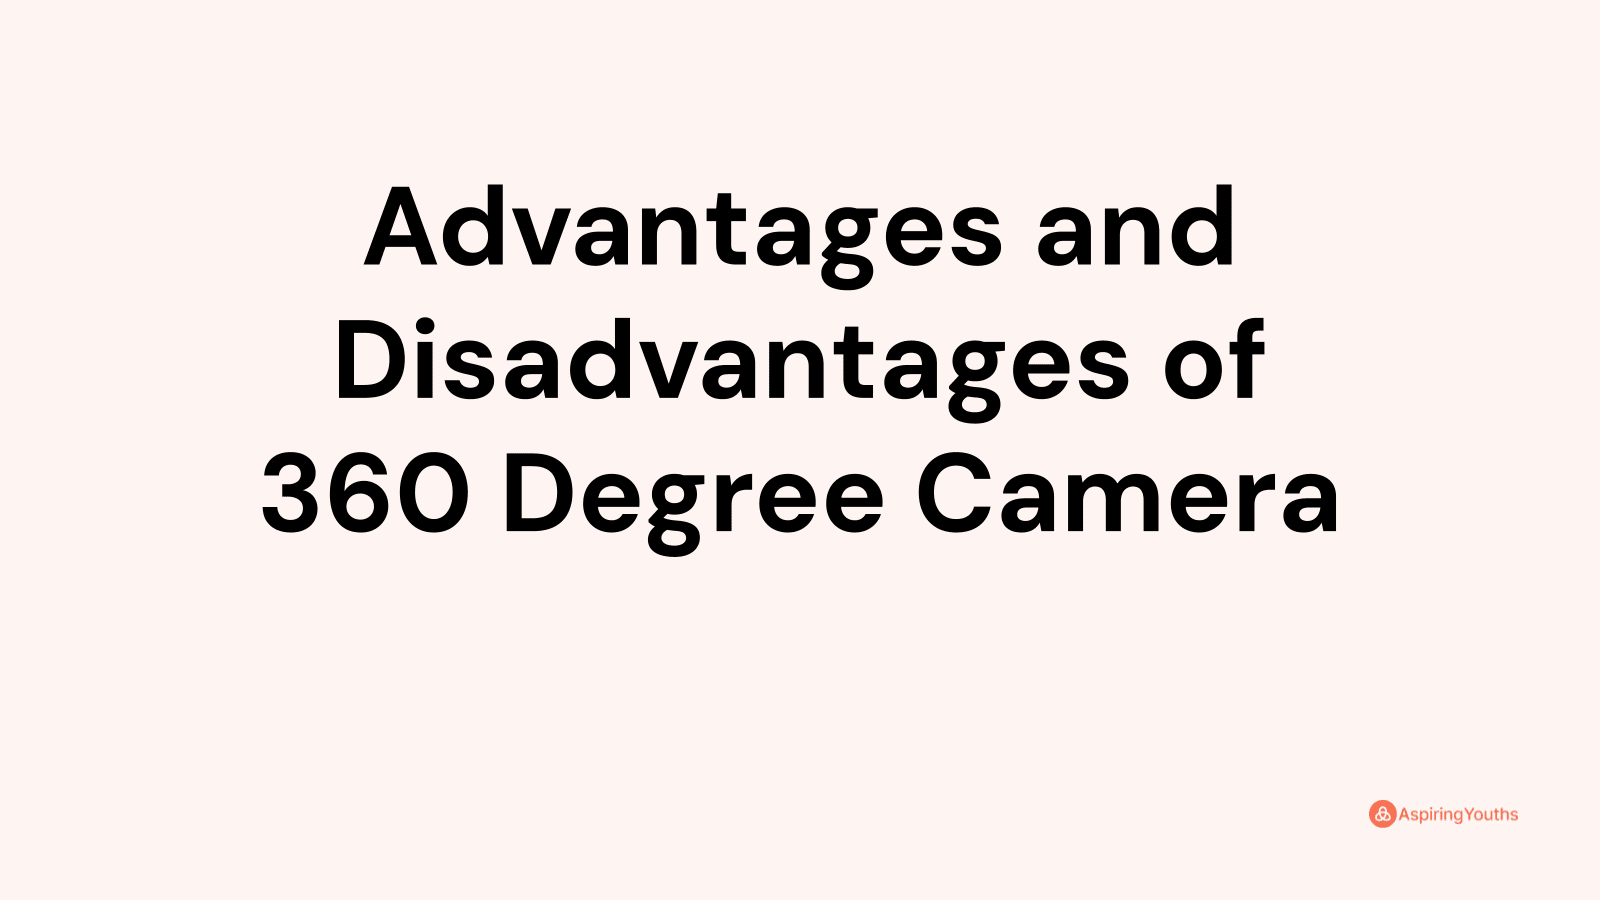 Advantages and disadvantages of 360 Degree Camera